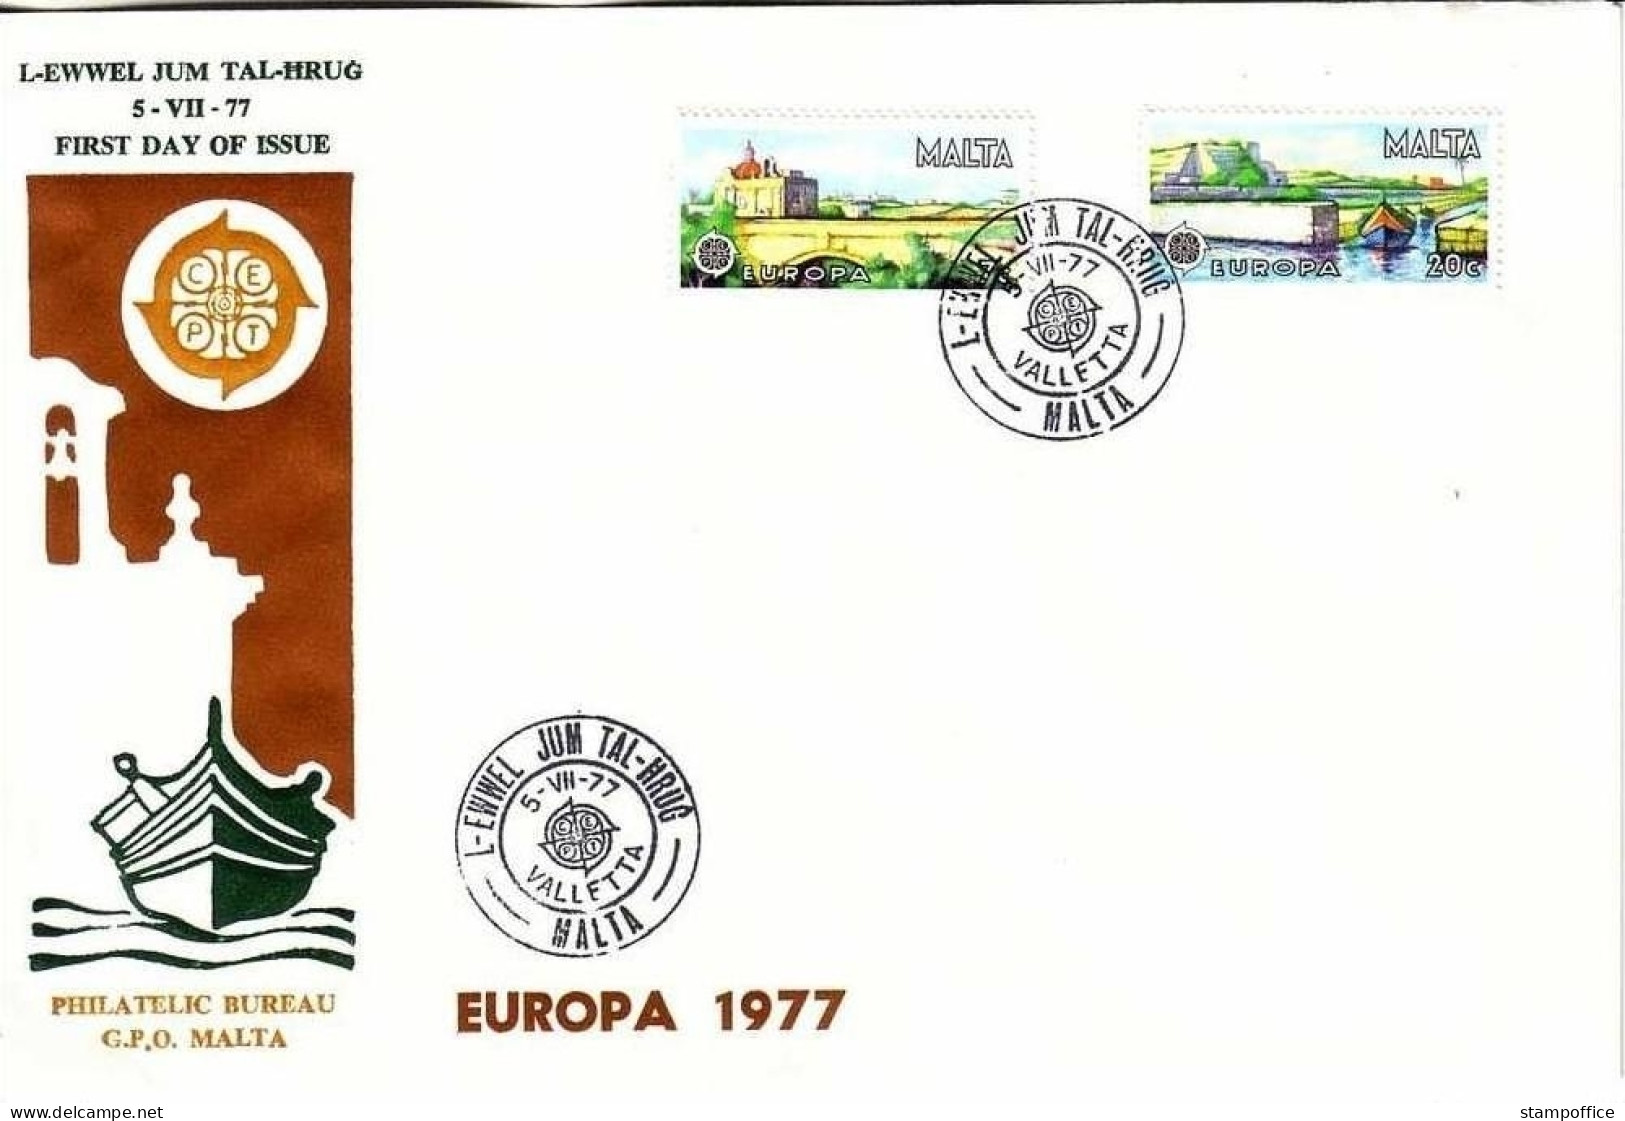 MALTA MI-NR. 554-555 FDC EUROPA 1977 - LANDSCHAFTEN - 1977